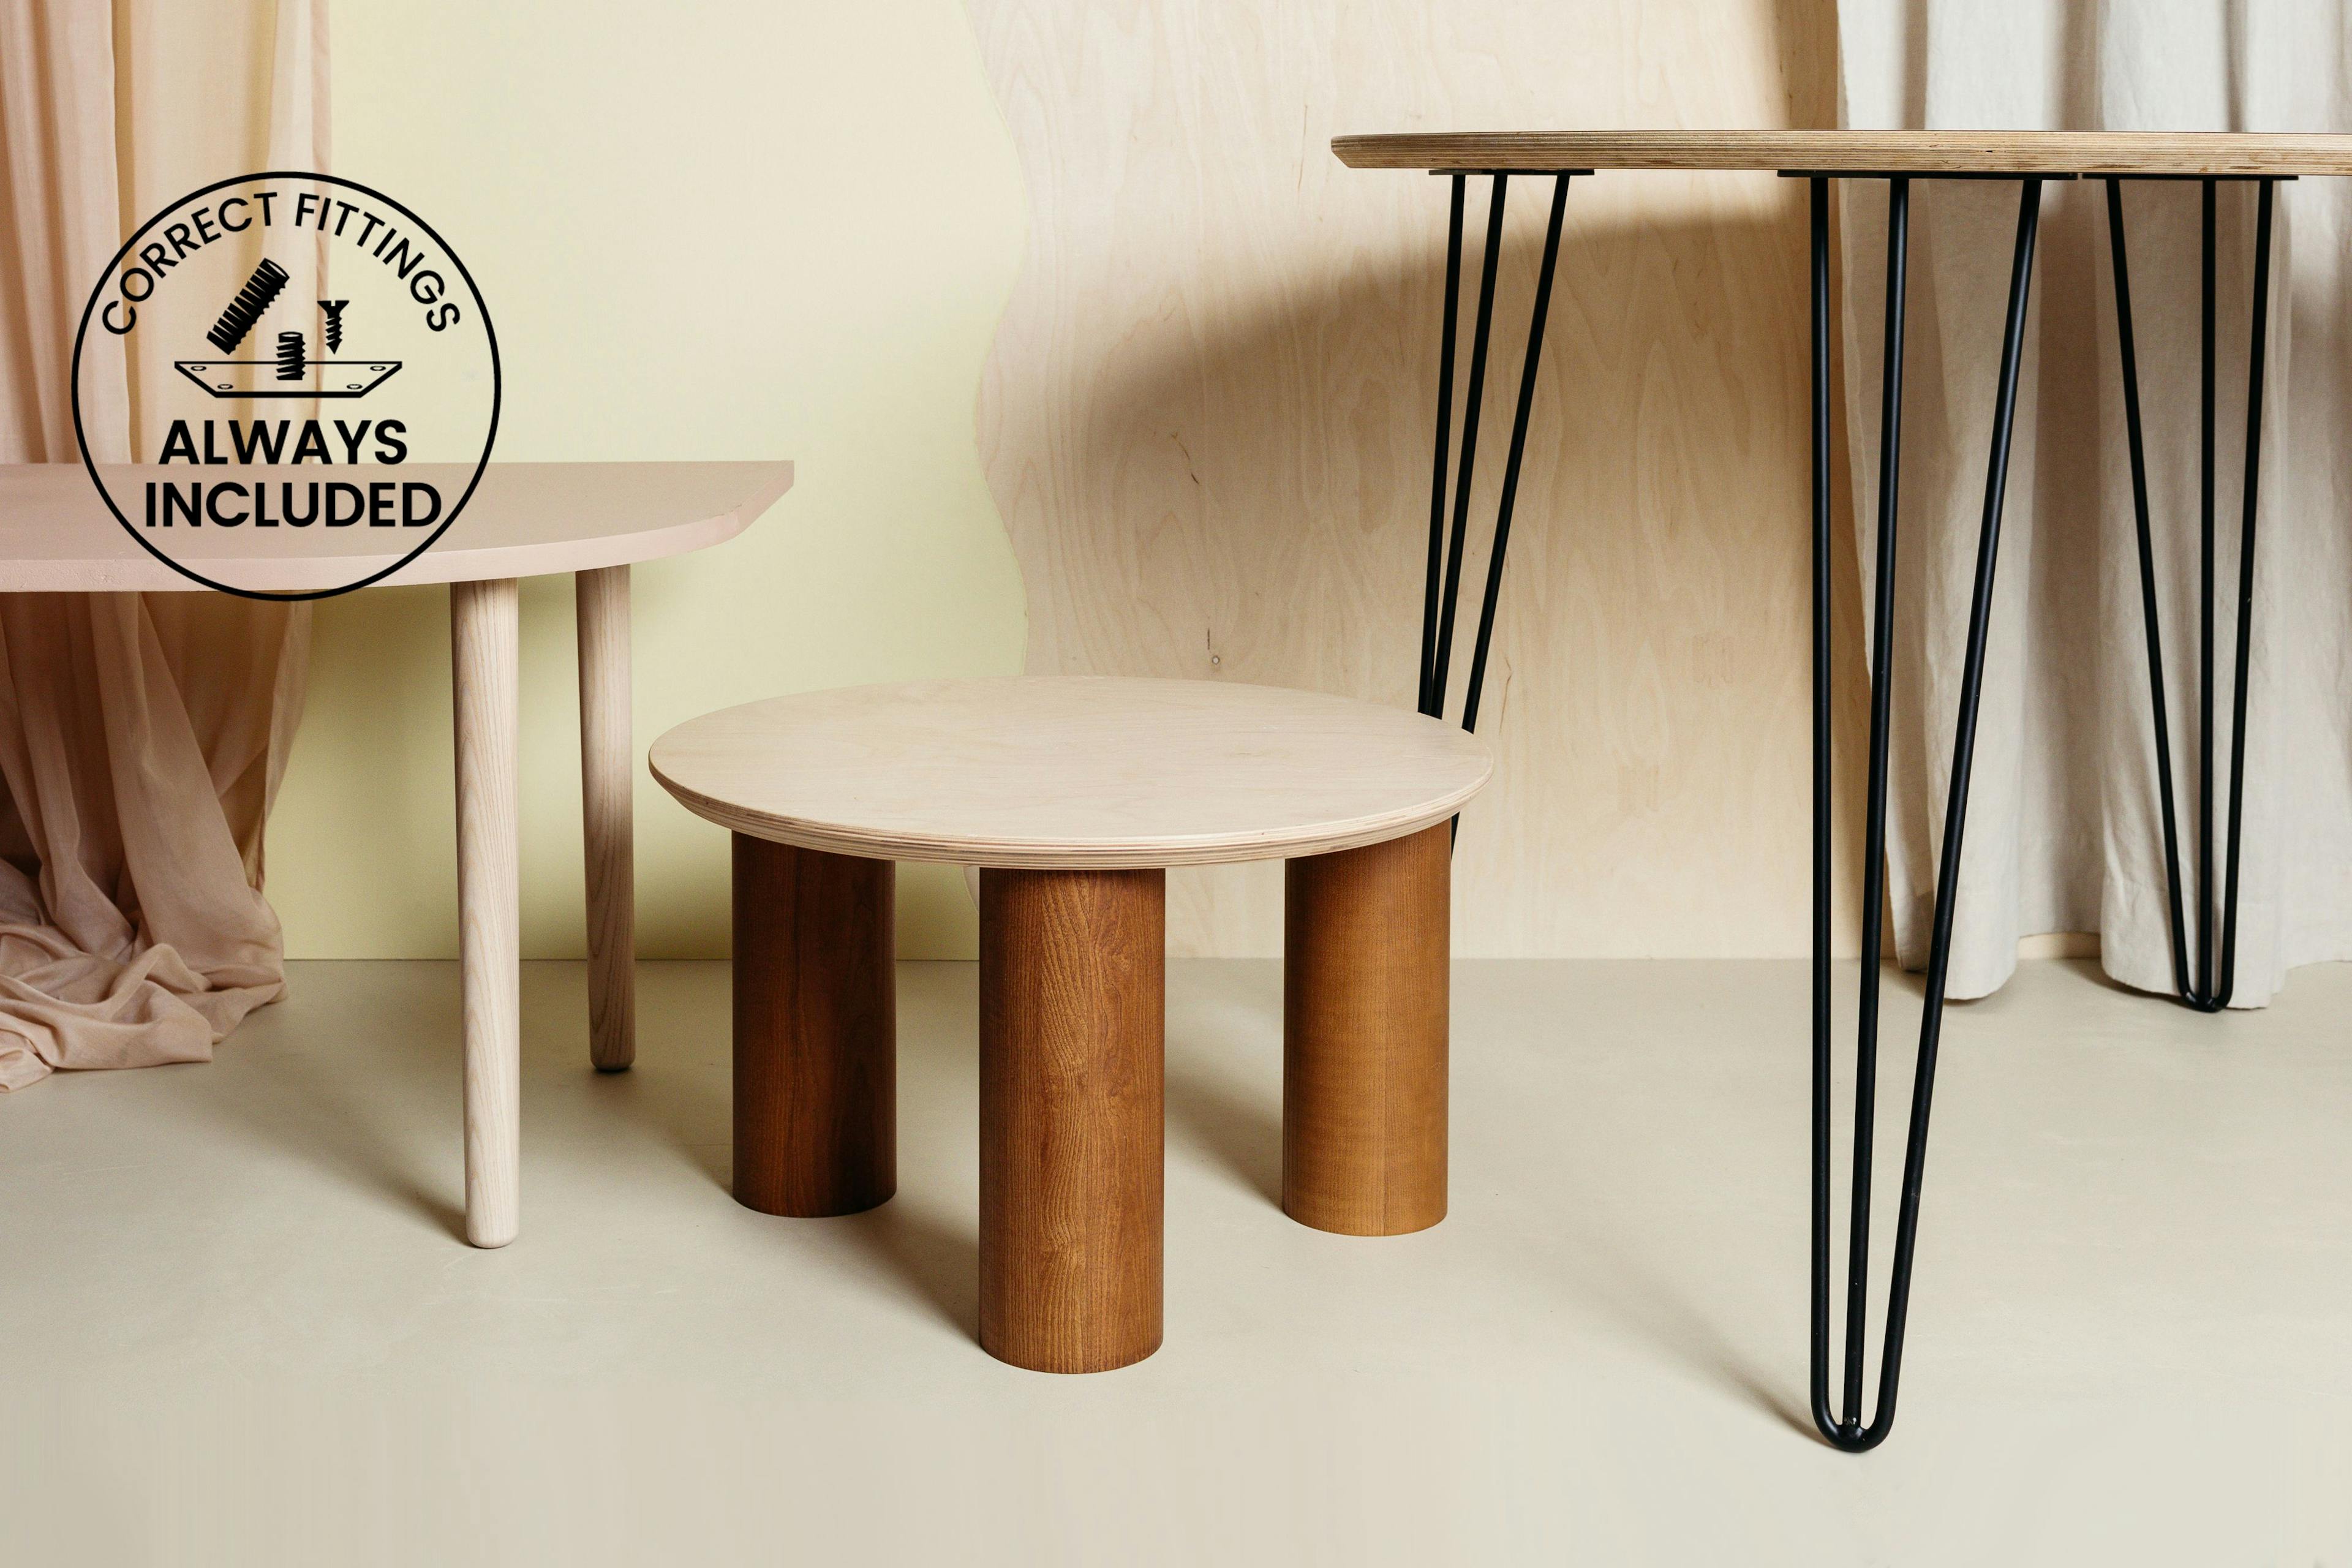 Buy modern table legs for IKEA